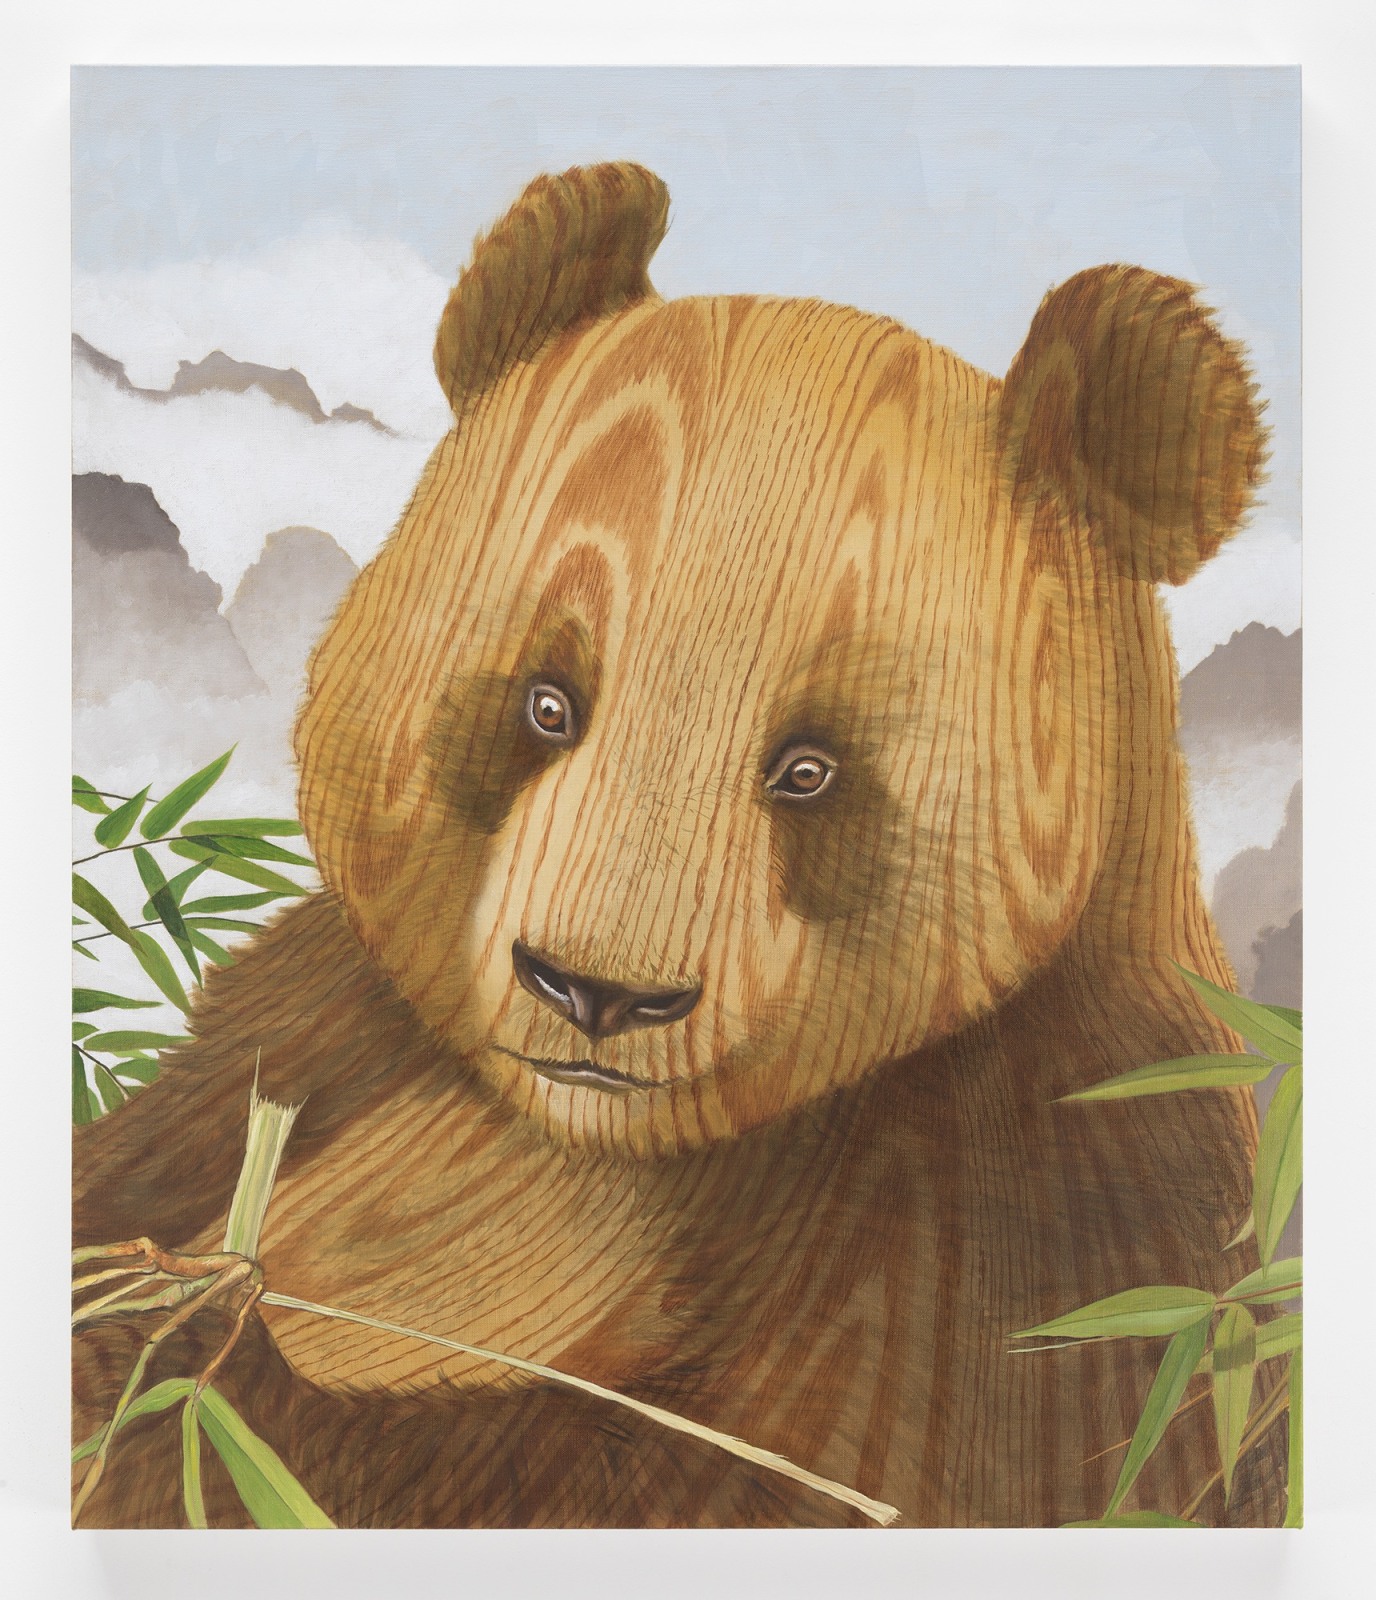 Sean Landers, Wood Panda